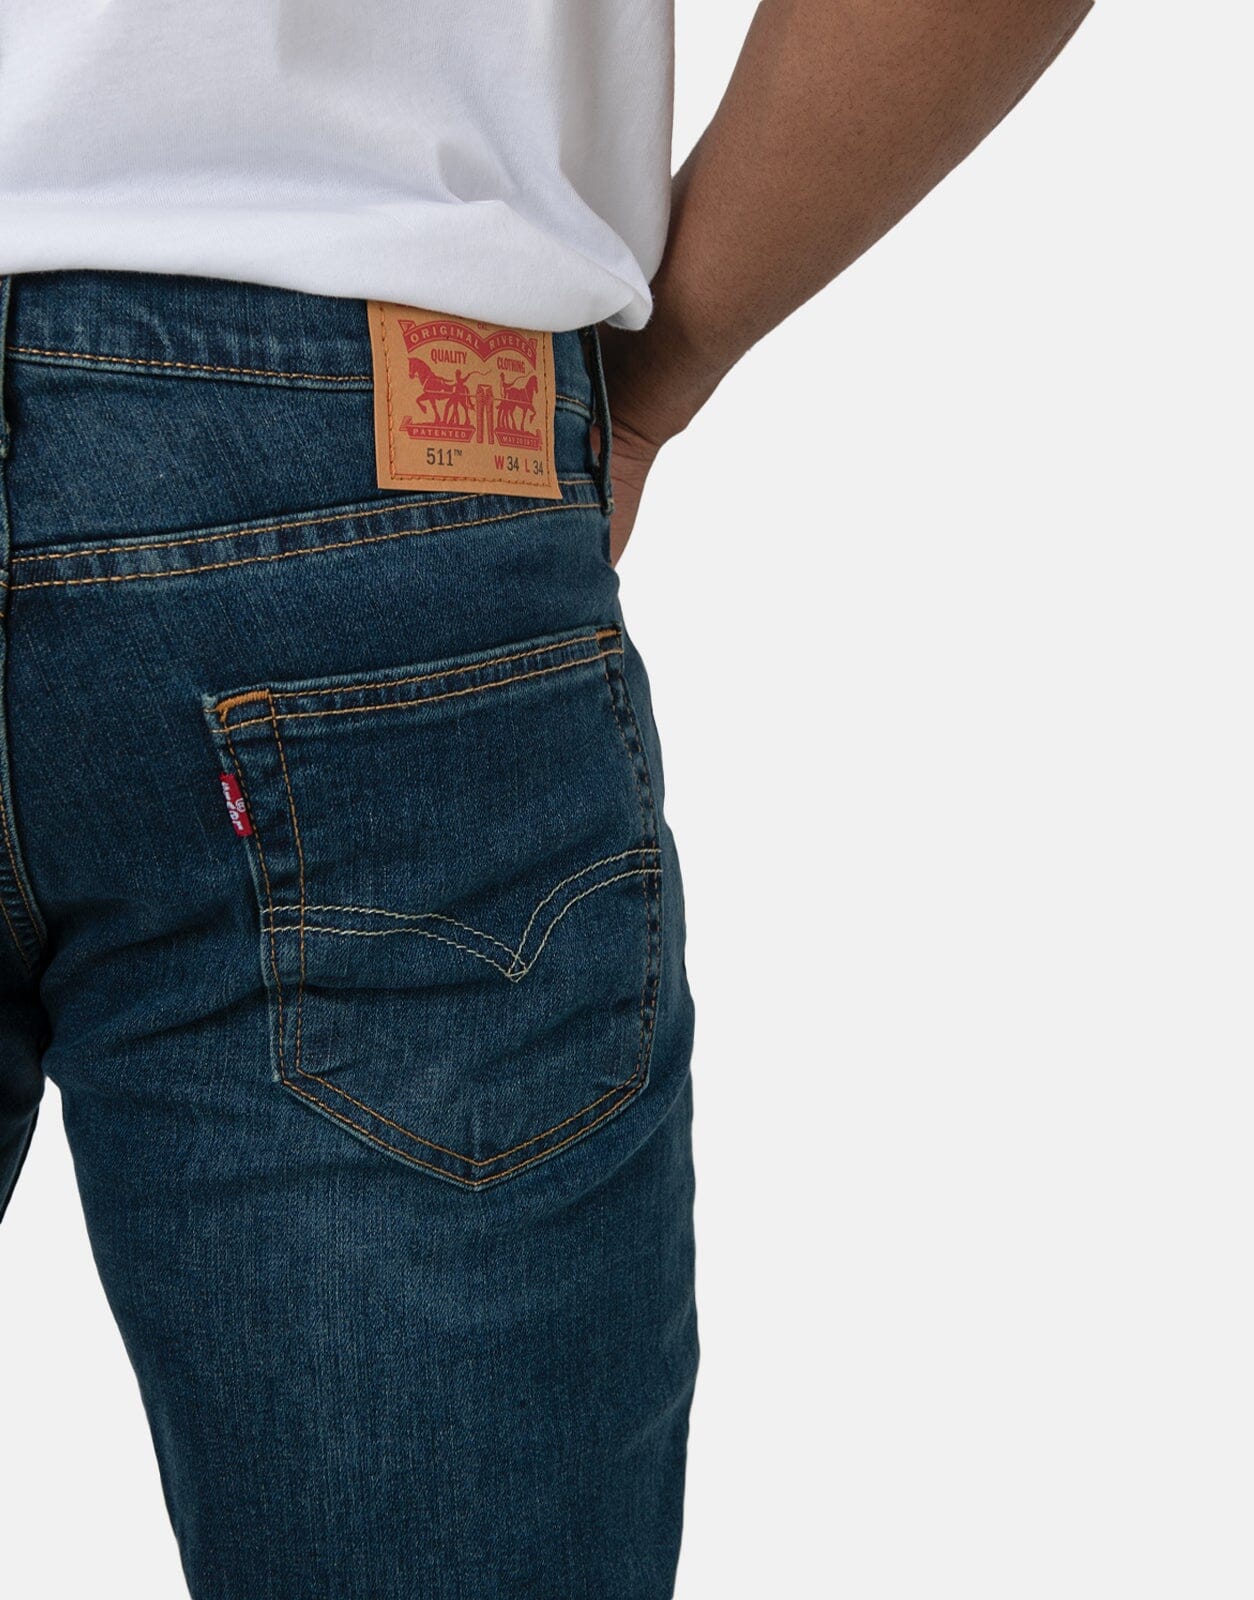 Levi's 511 Slim Canyon Dark Jeans - Subwear